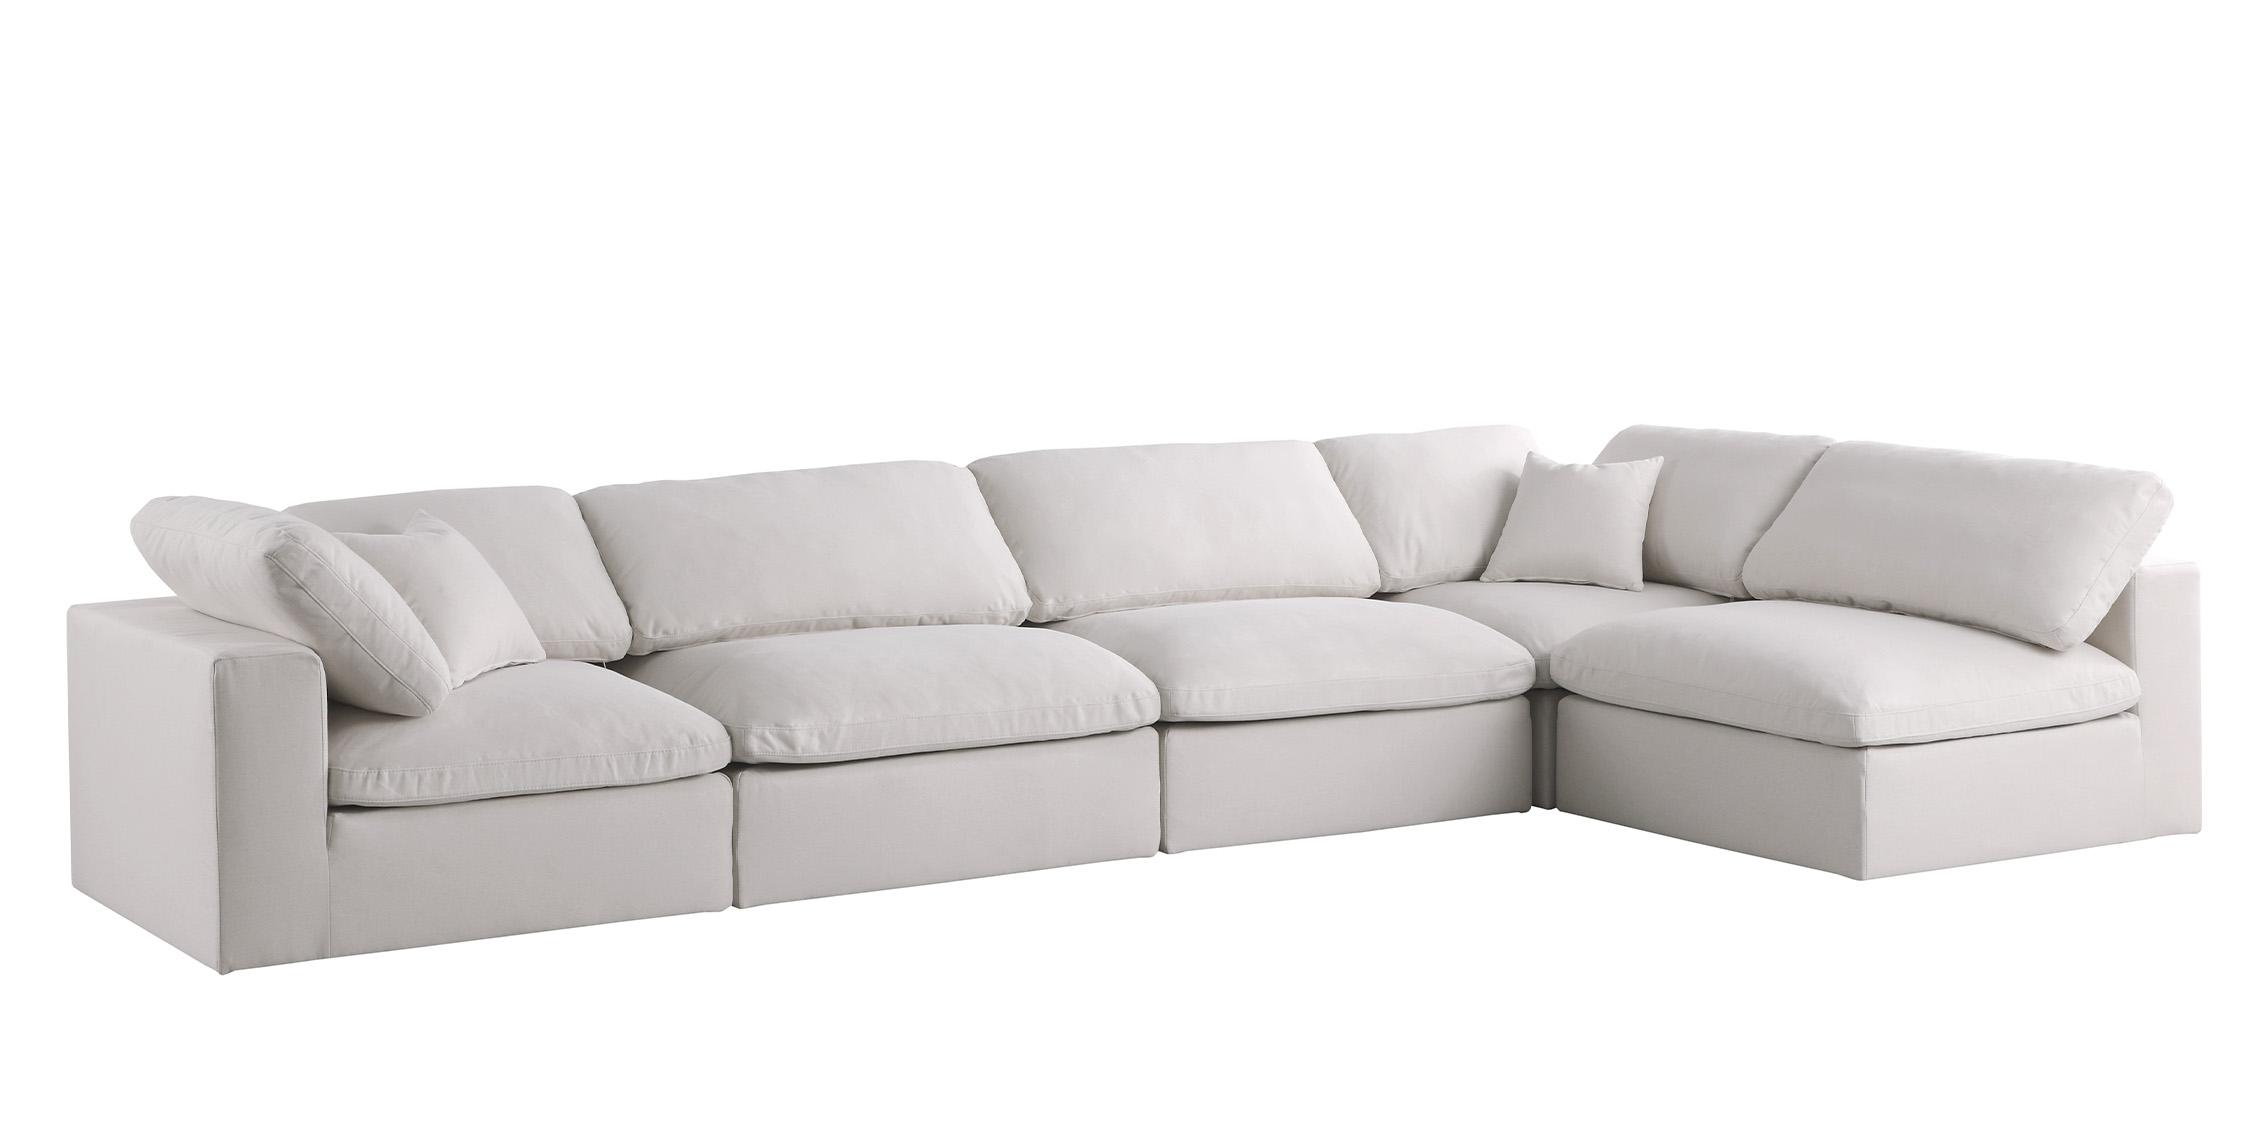 Contemporary, Modern Modular Sectional Sofa 602Cream-Sec5D 602Cream-Sec5D in Cream Fabric